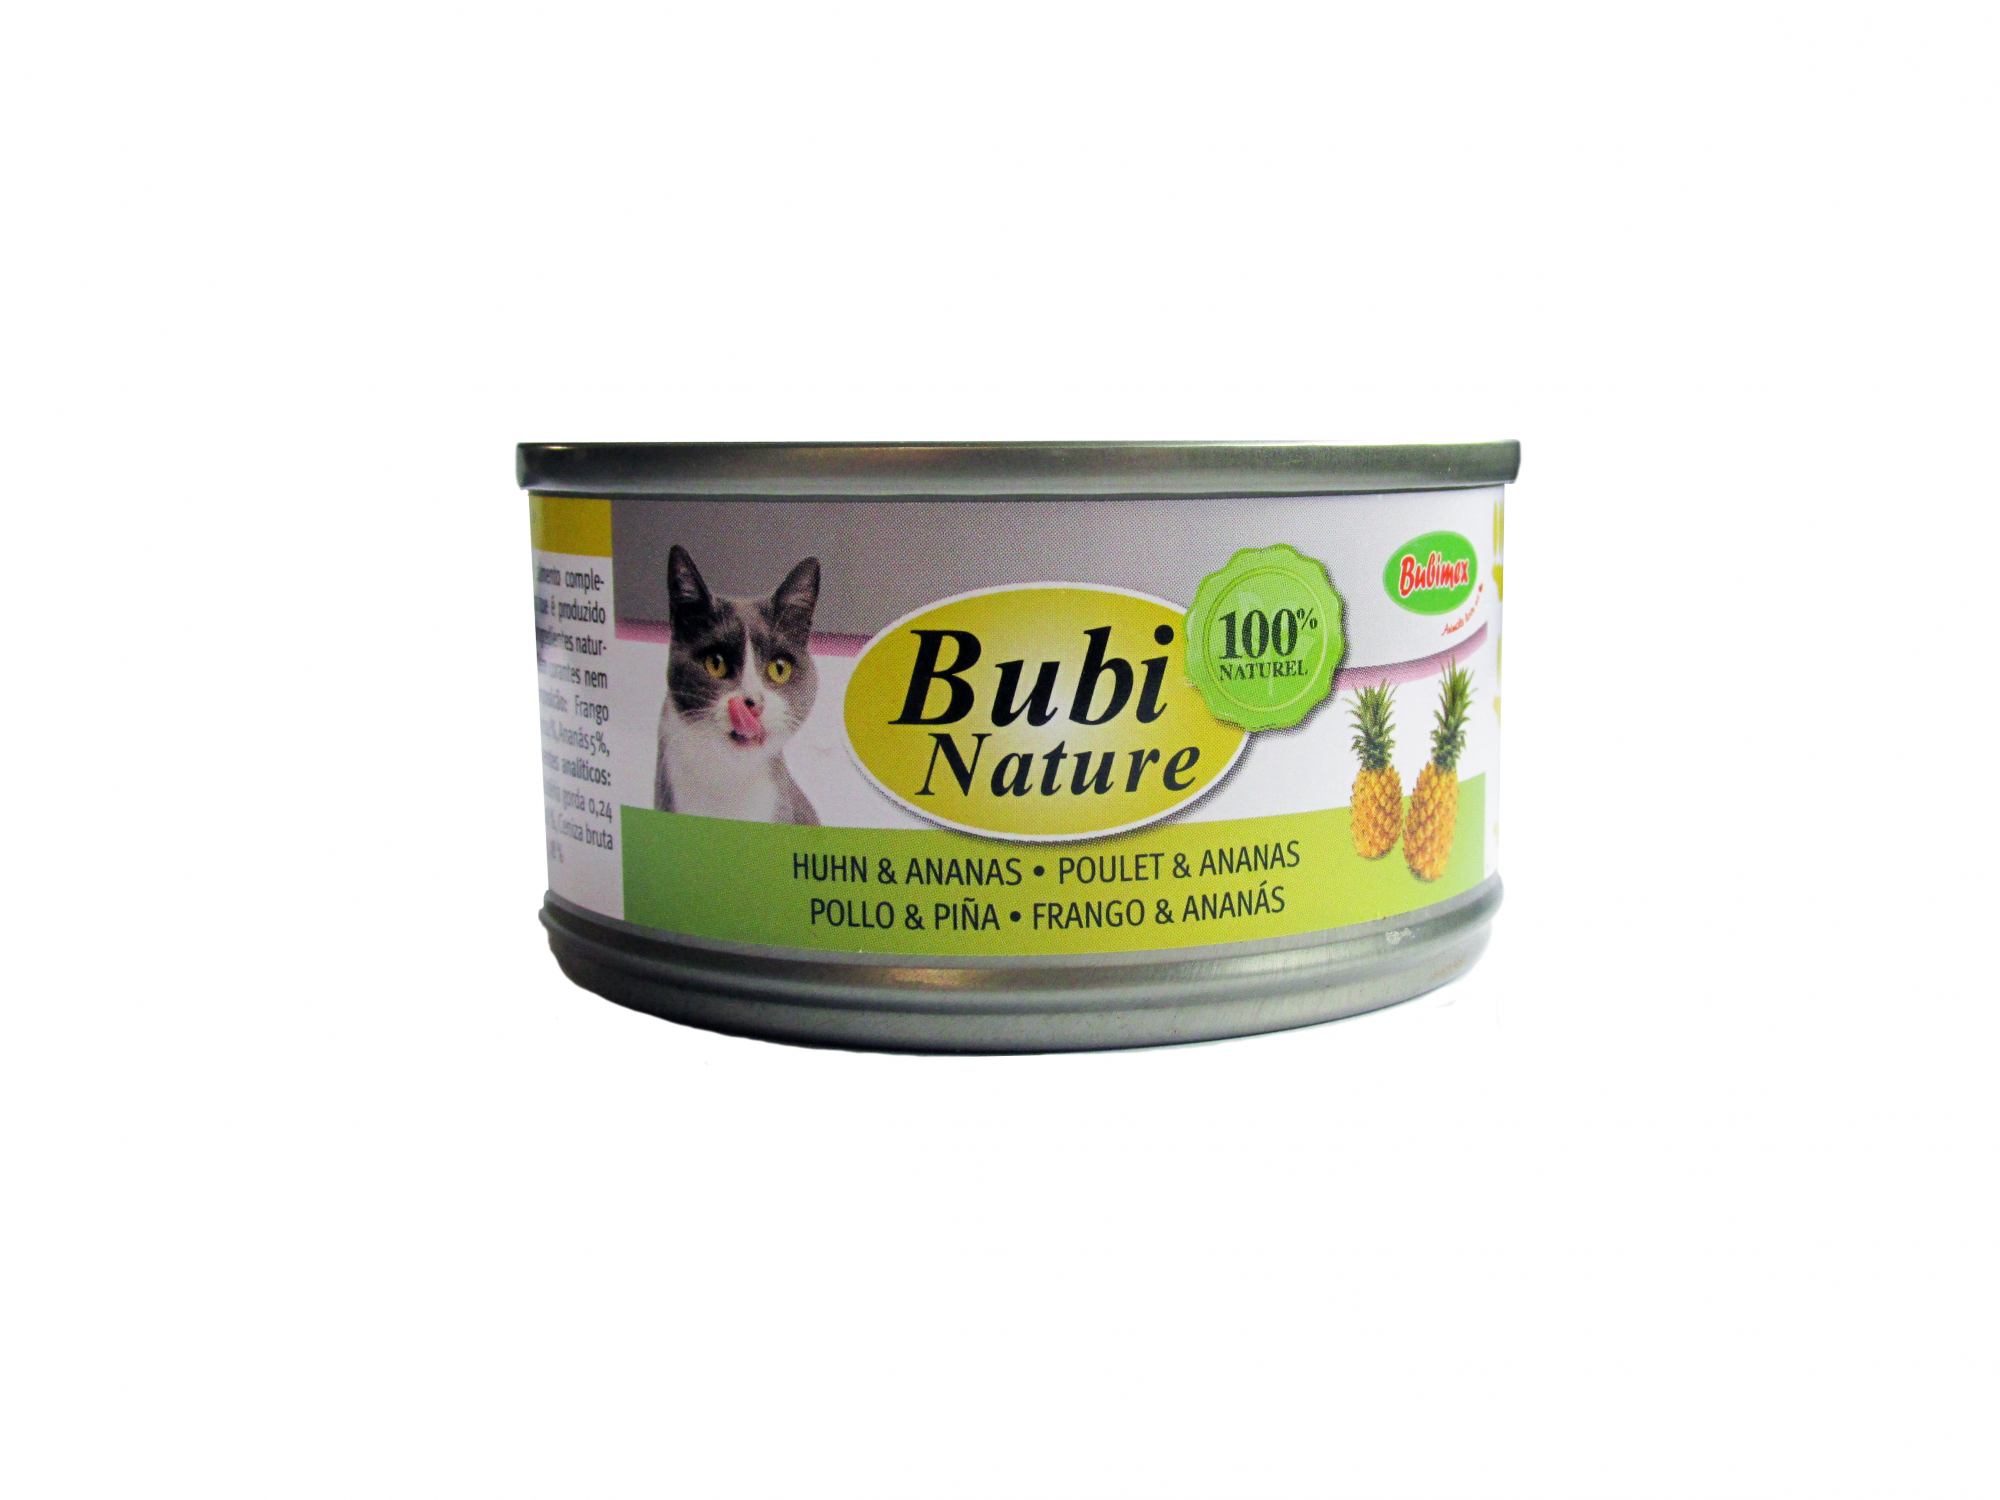 BUBIMEX Bubi Nature Pollo y Piña comida húmeda para gatos 70g